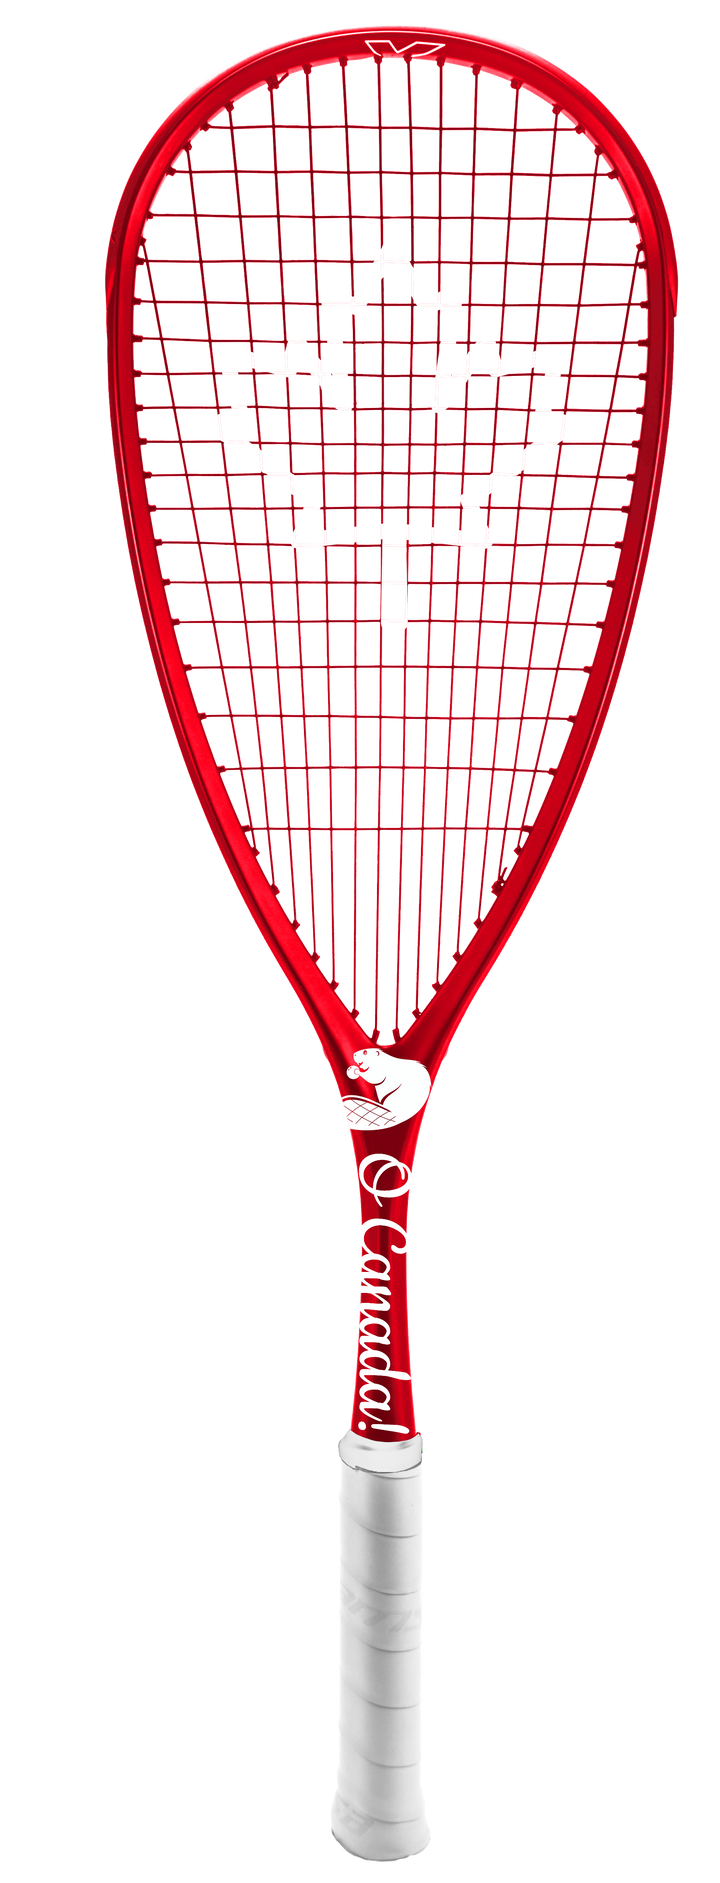 Xamsa Onyx eXposed - O Canada! - Limited Edition Squash Racquet - XamsaSquash